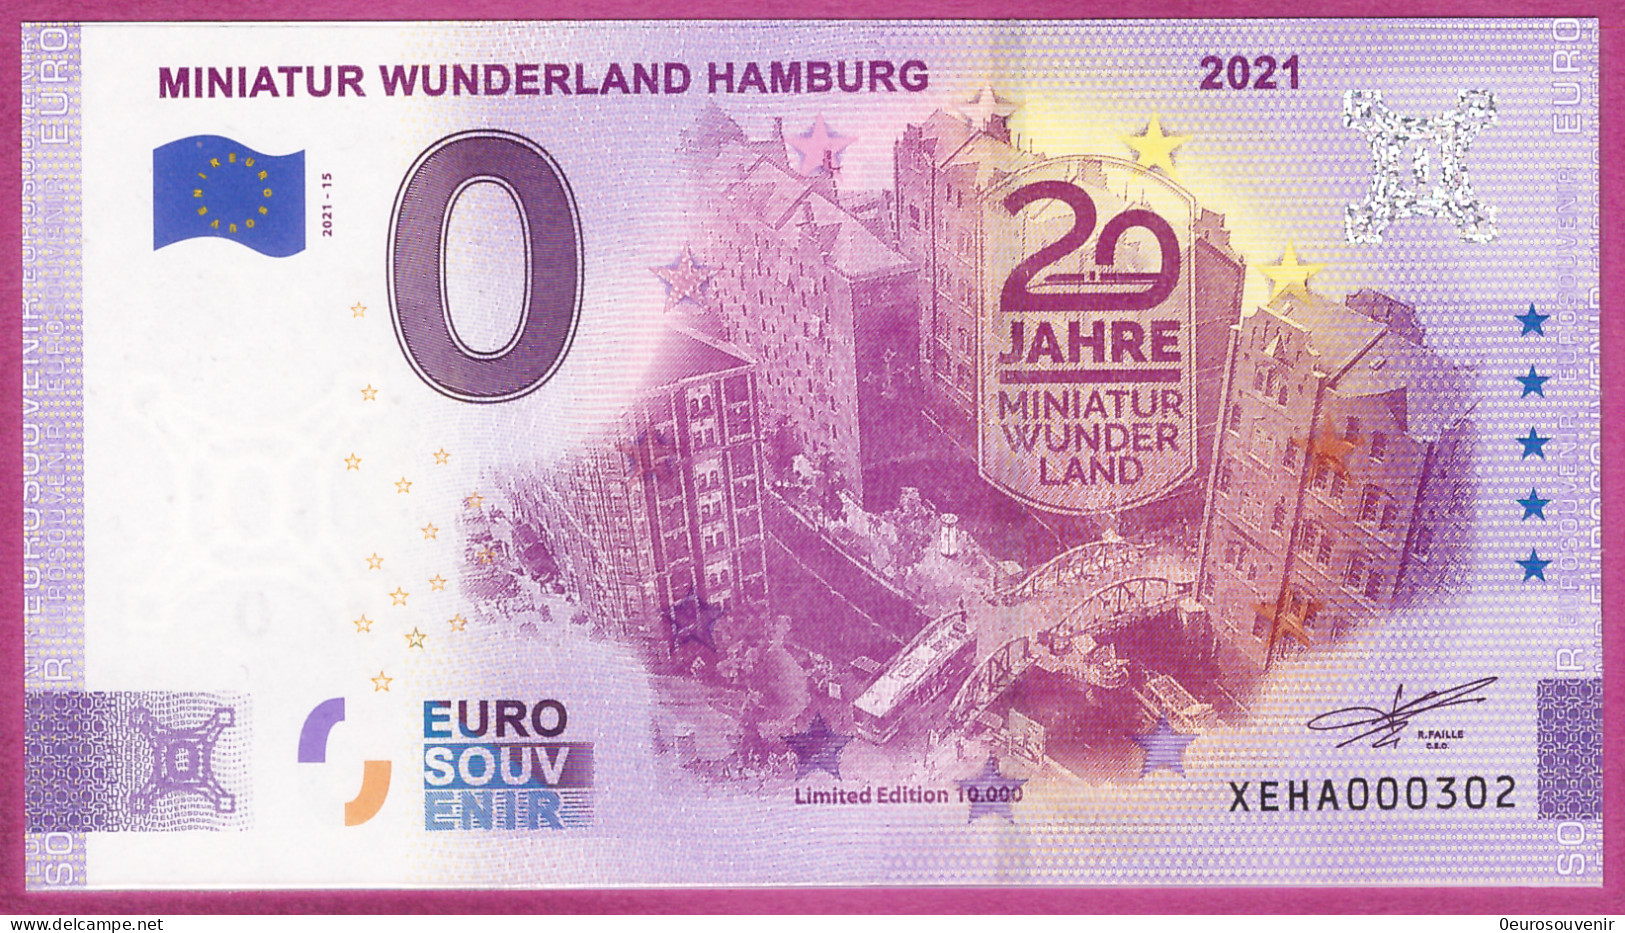 0-Euro XEHA 2021-15 MINIATUR WUNDERLAND HAMBURG - 20 JAHRE 2021 - Private Proofs / Unofficial